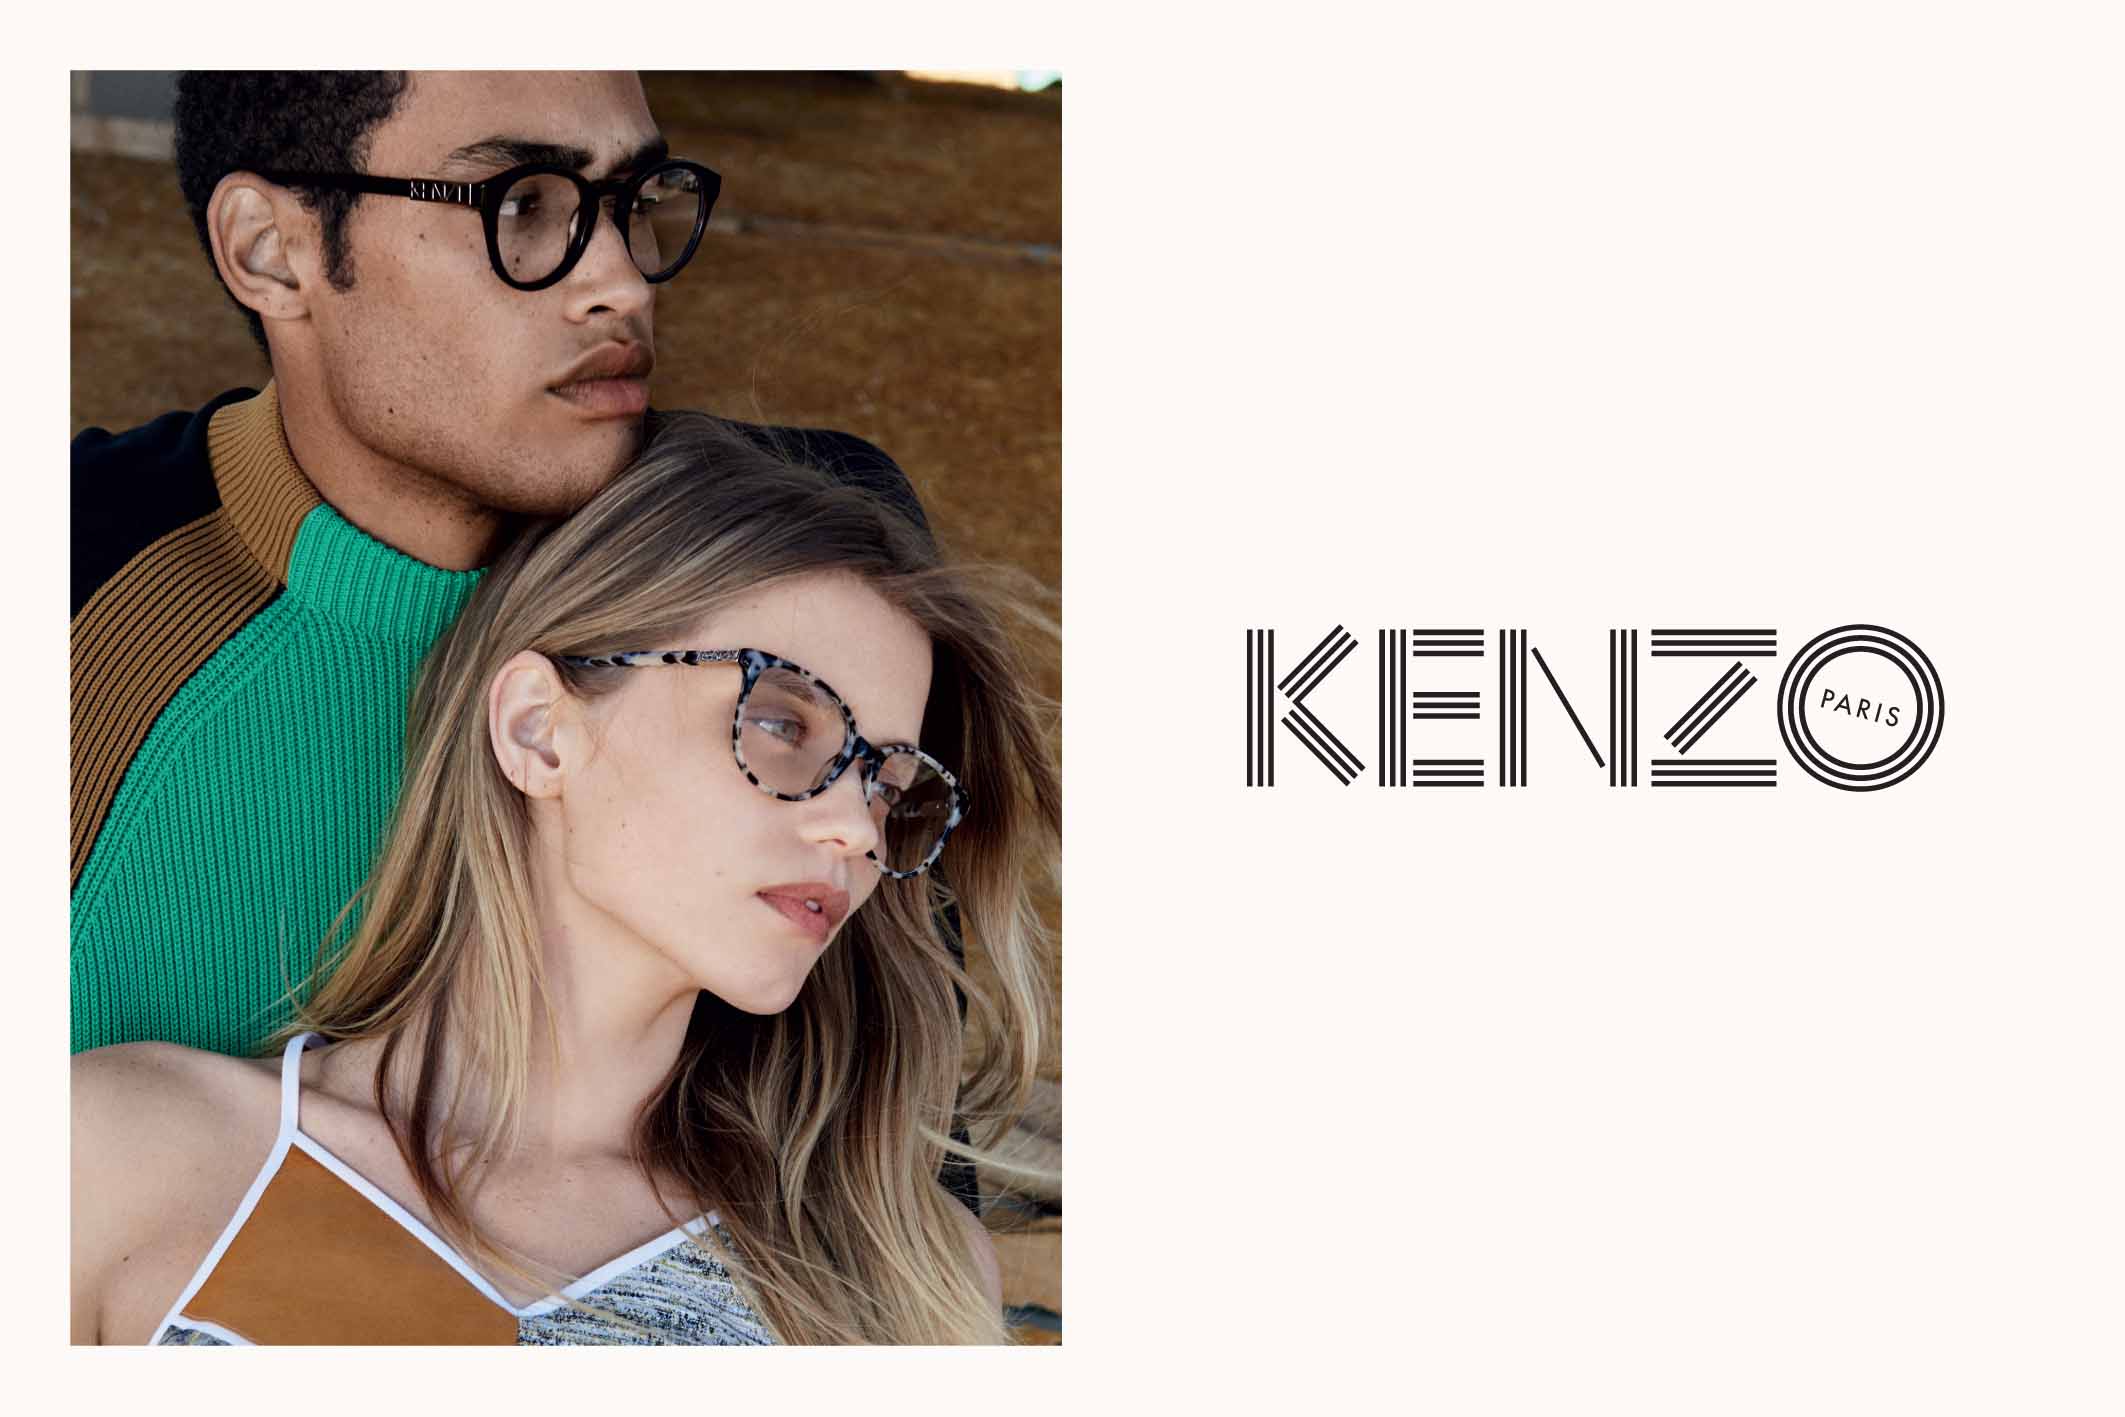 kenzo eyeglasses